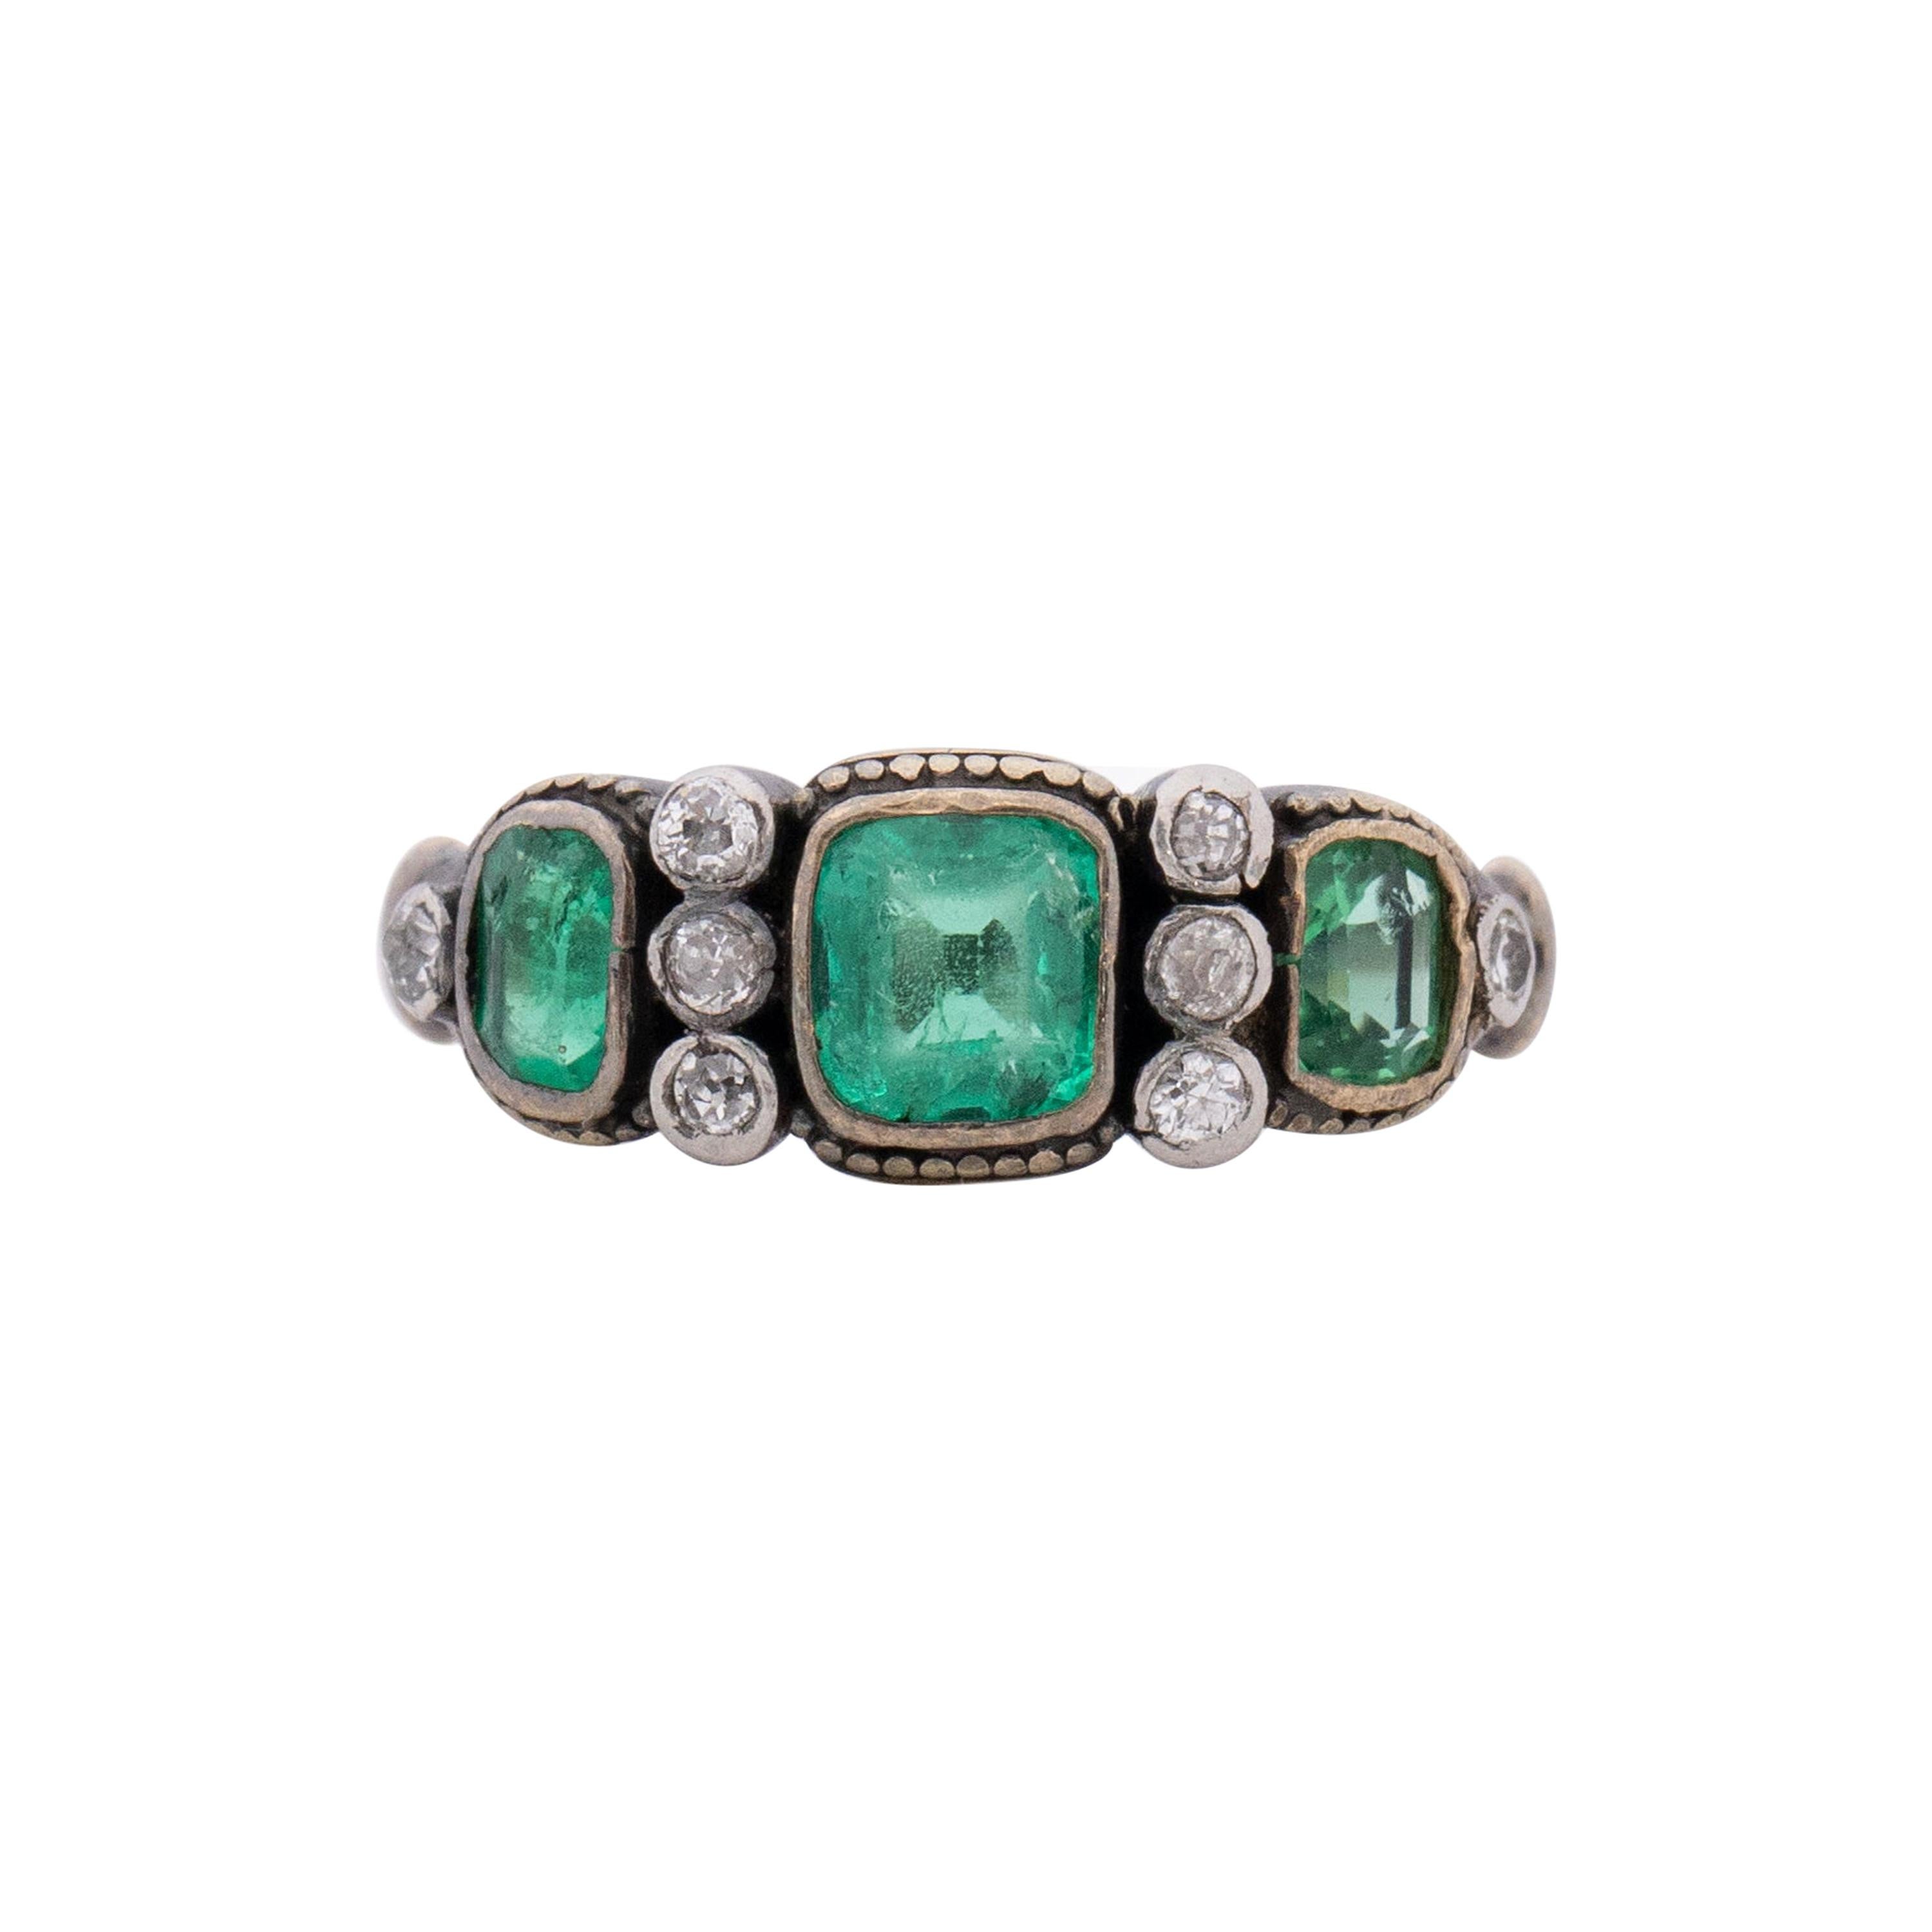 1.40 Carat Art Deco Diamond Platinum Engagement Ring For Sale